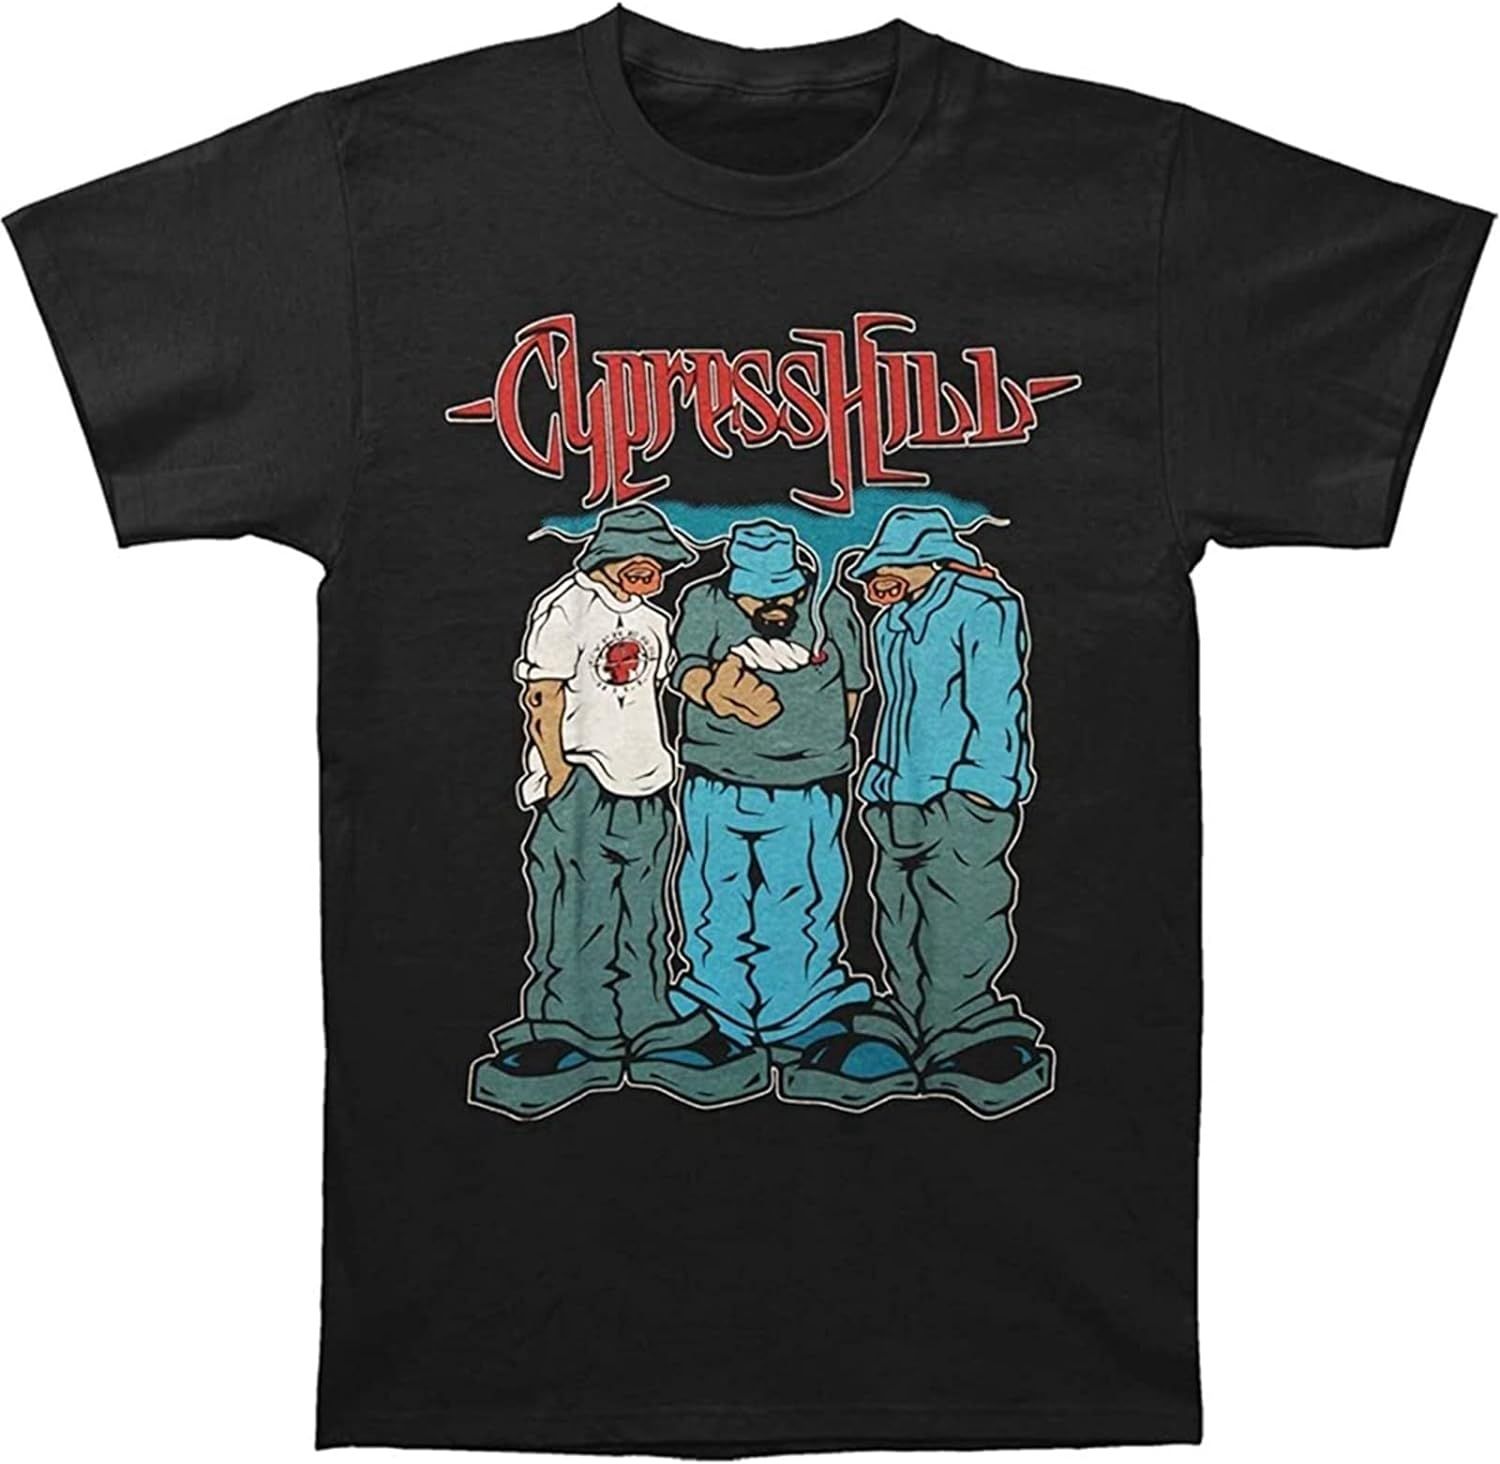 Cypress hill insane in the brain. Одежда для Хиллс. Cypress Hill t Shirt. Insane in the Brain Cypress Hill обложка. Insane in the Brain Cypress Hill Showtime.